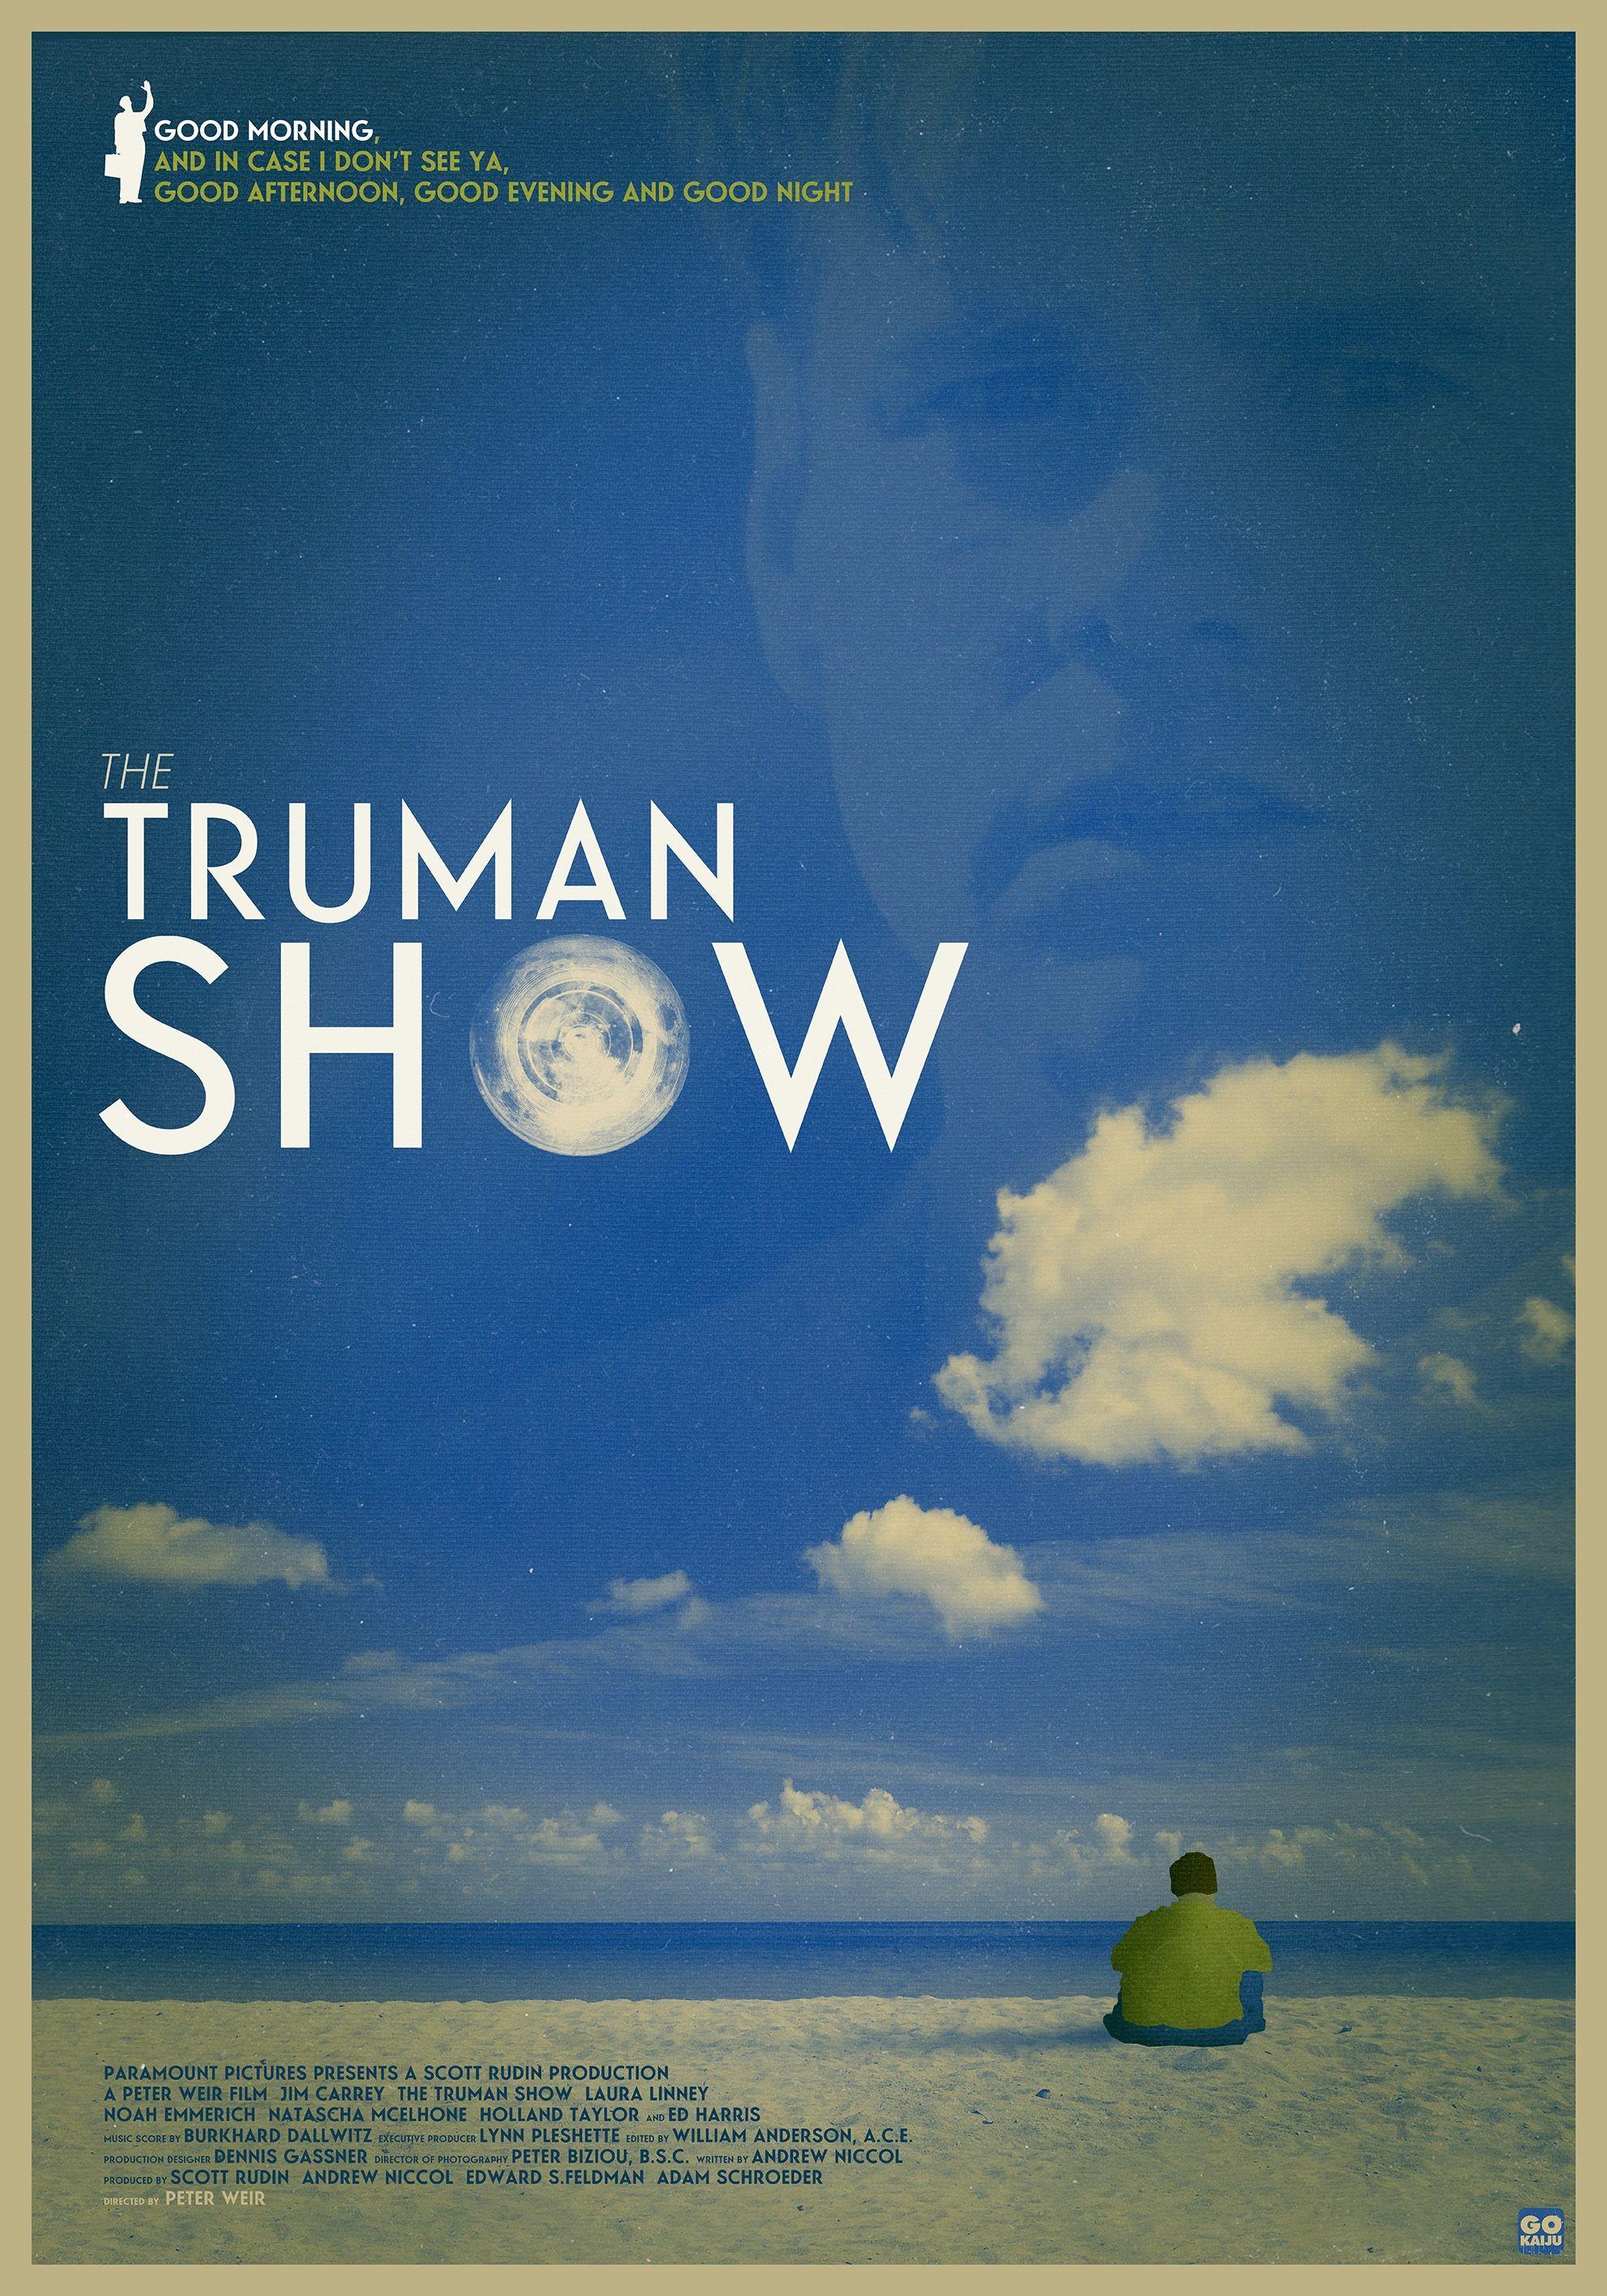 The Truman Show. Movies * TV * Docs. The truman show